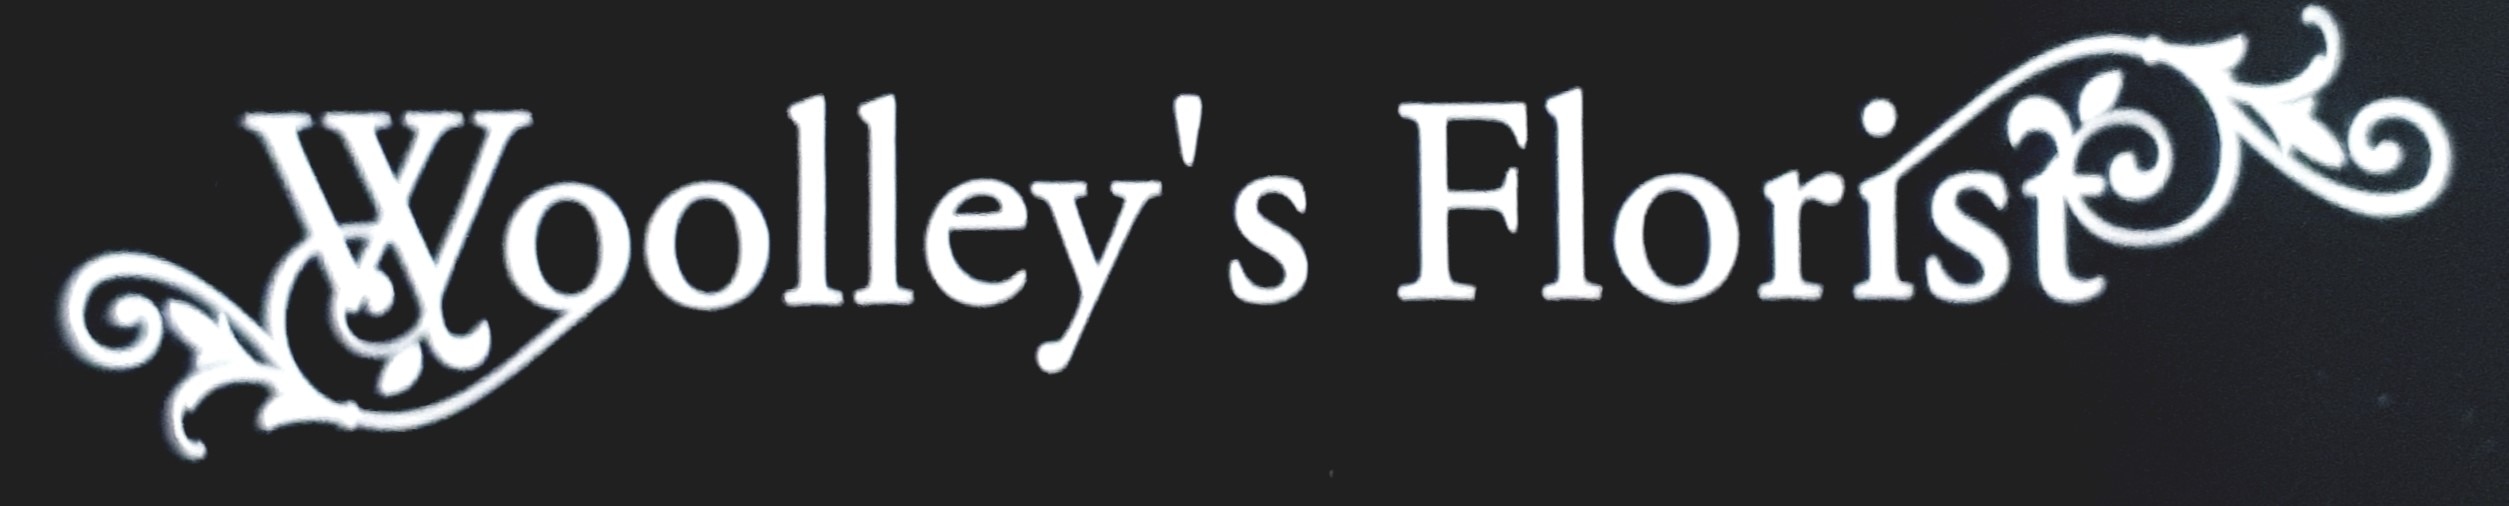 Woolley's Florist - Logo